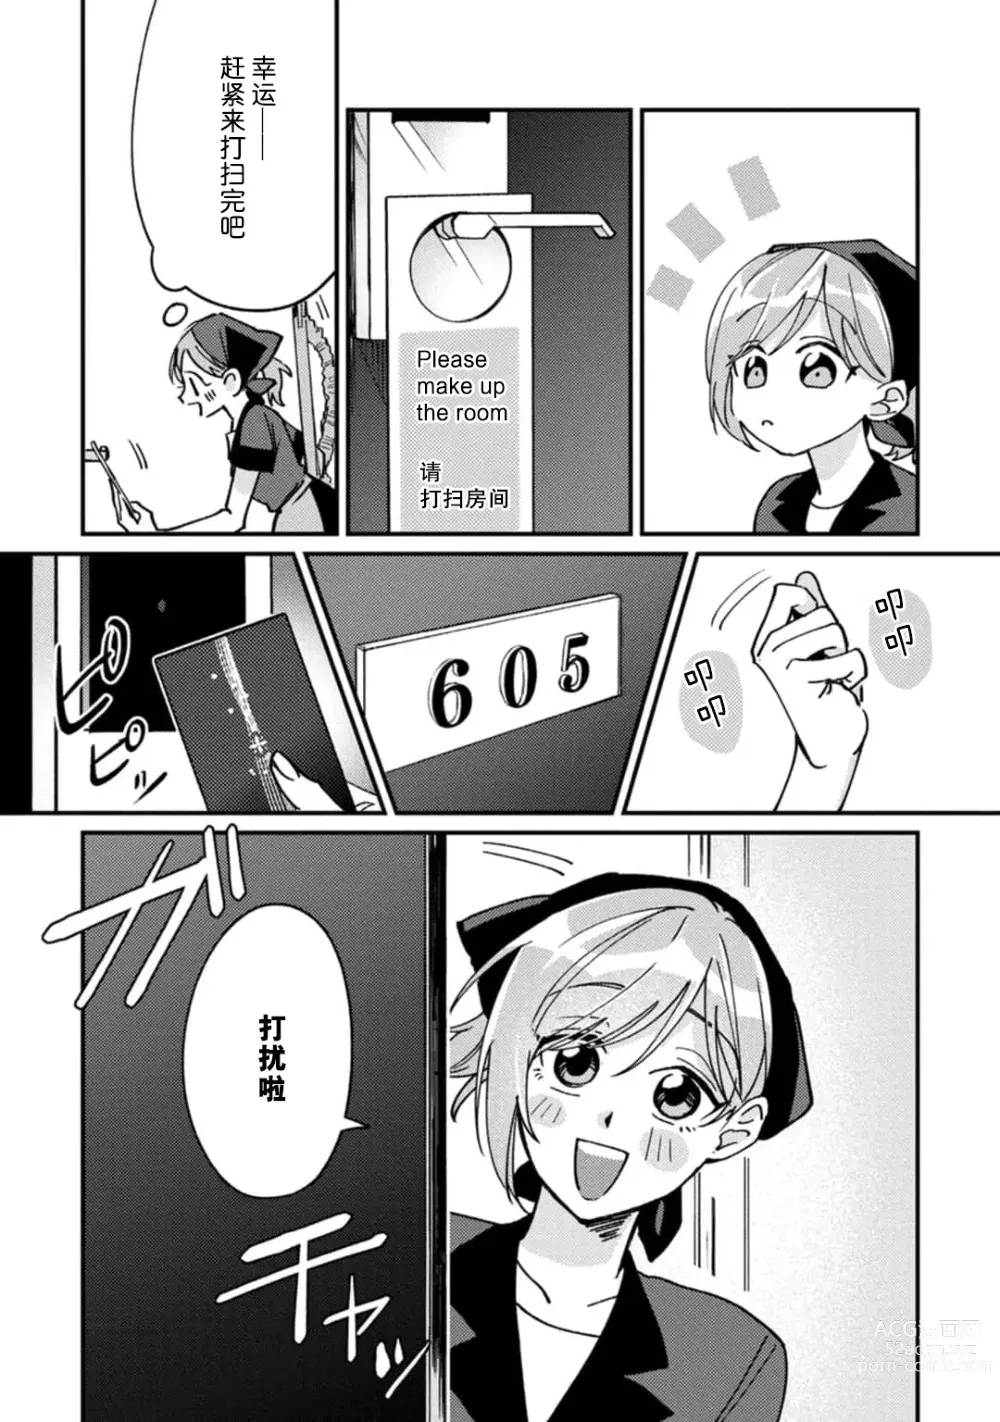 Page 5 of manga 请勿打扰！酒店客房服务员被常客绅士夺走第一次 1-3